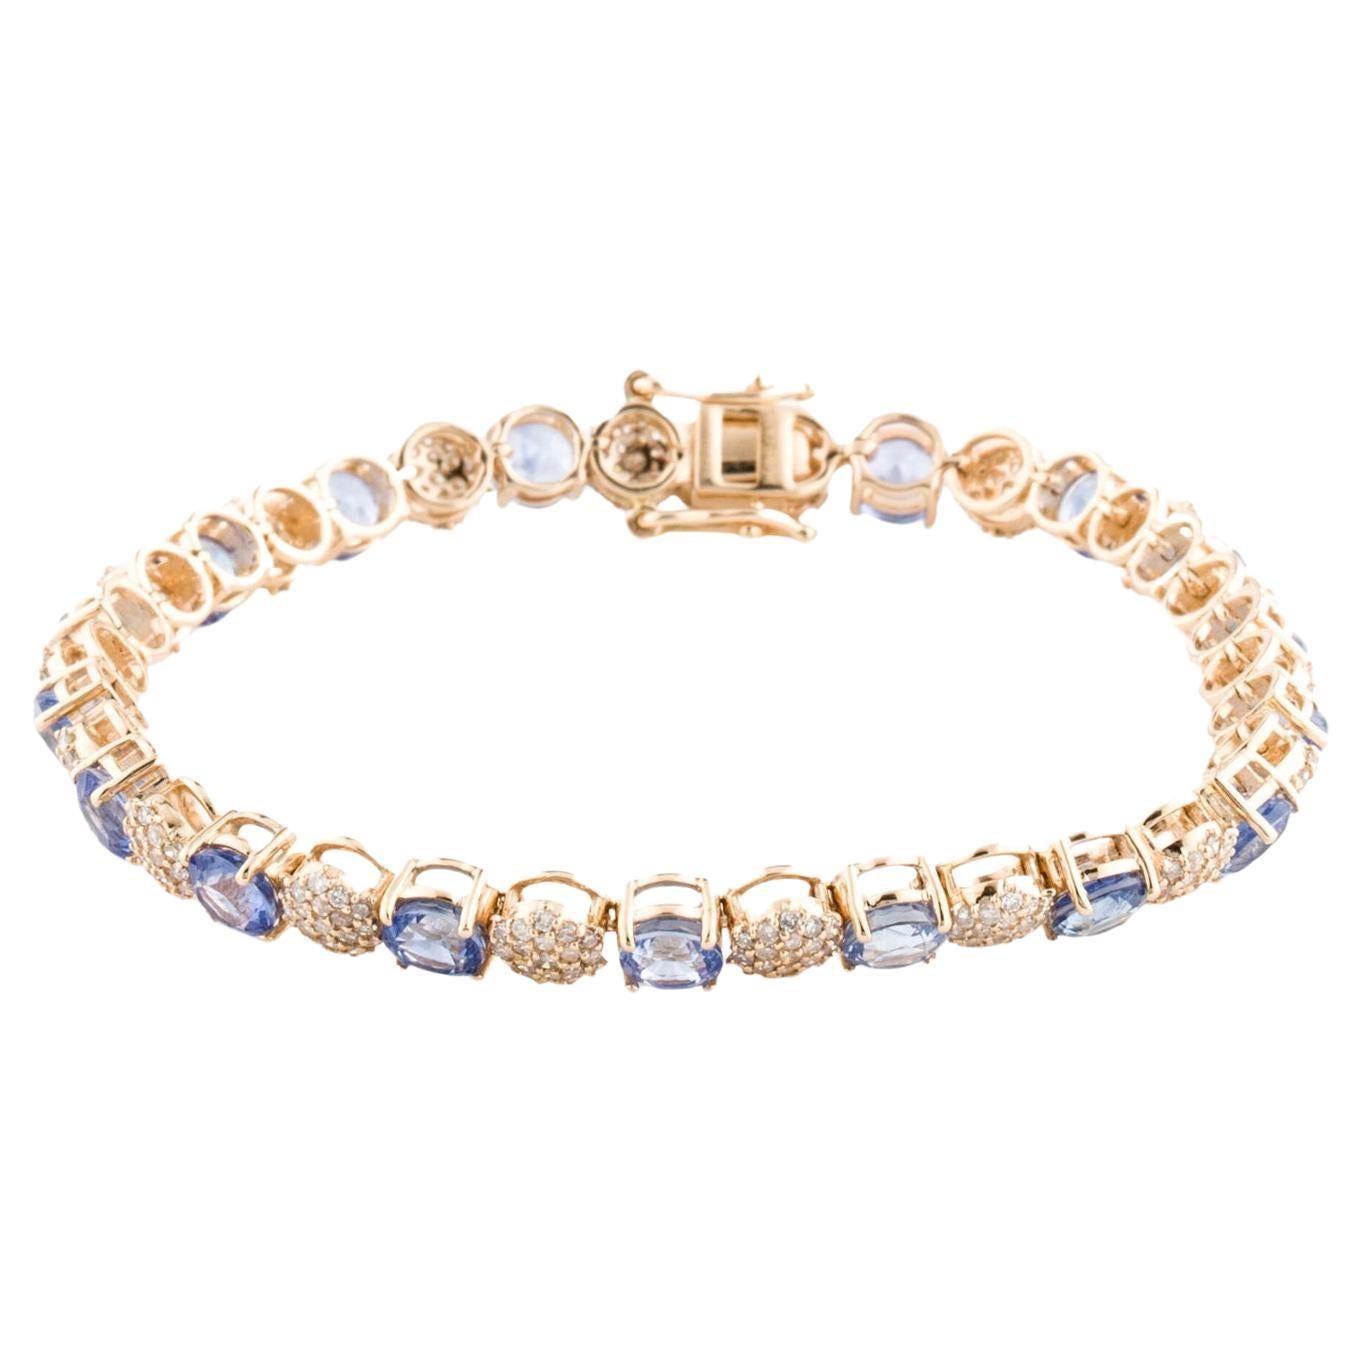 14K Sapphire & Diamond Tennis Bracelet - Elegant Sparkle, Timeless Glamour For Sale